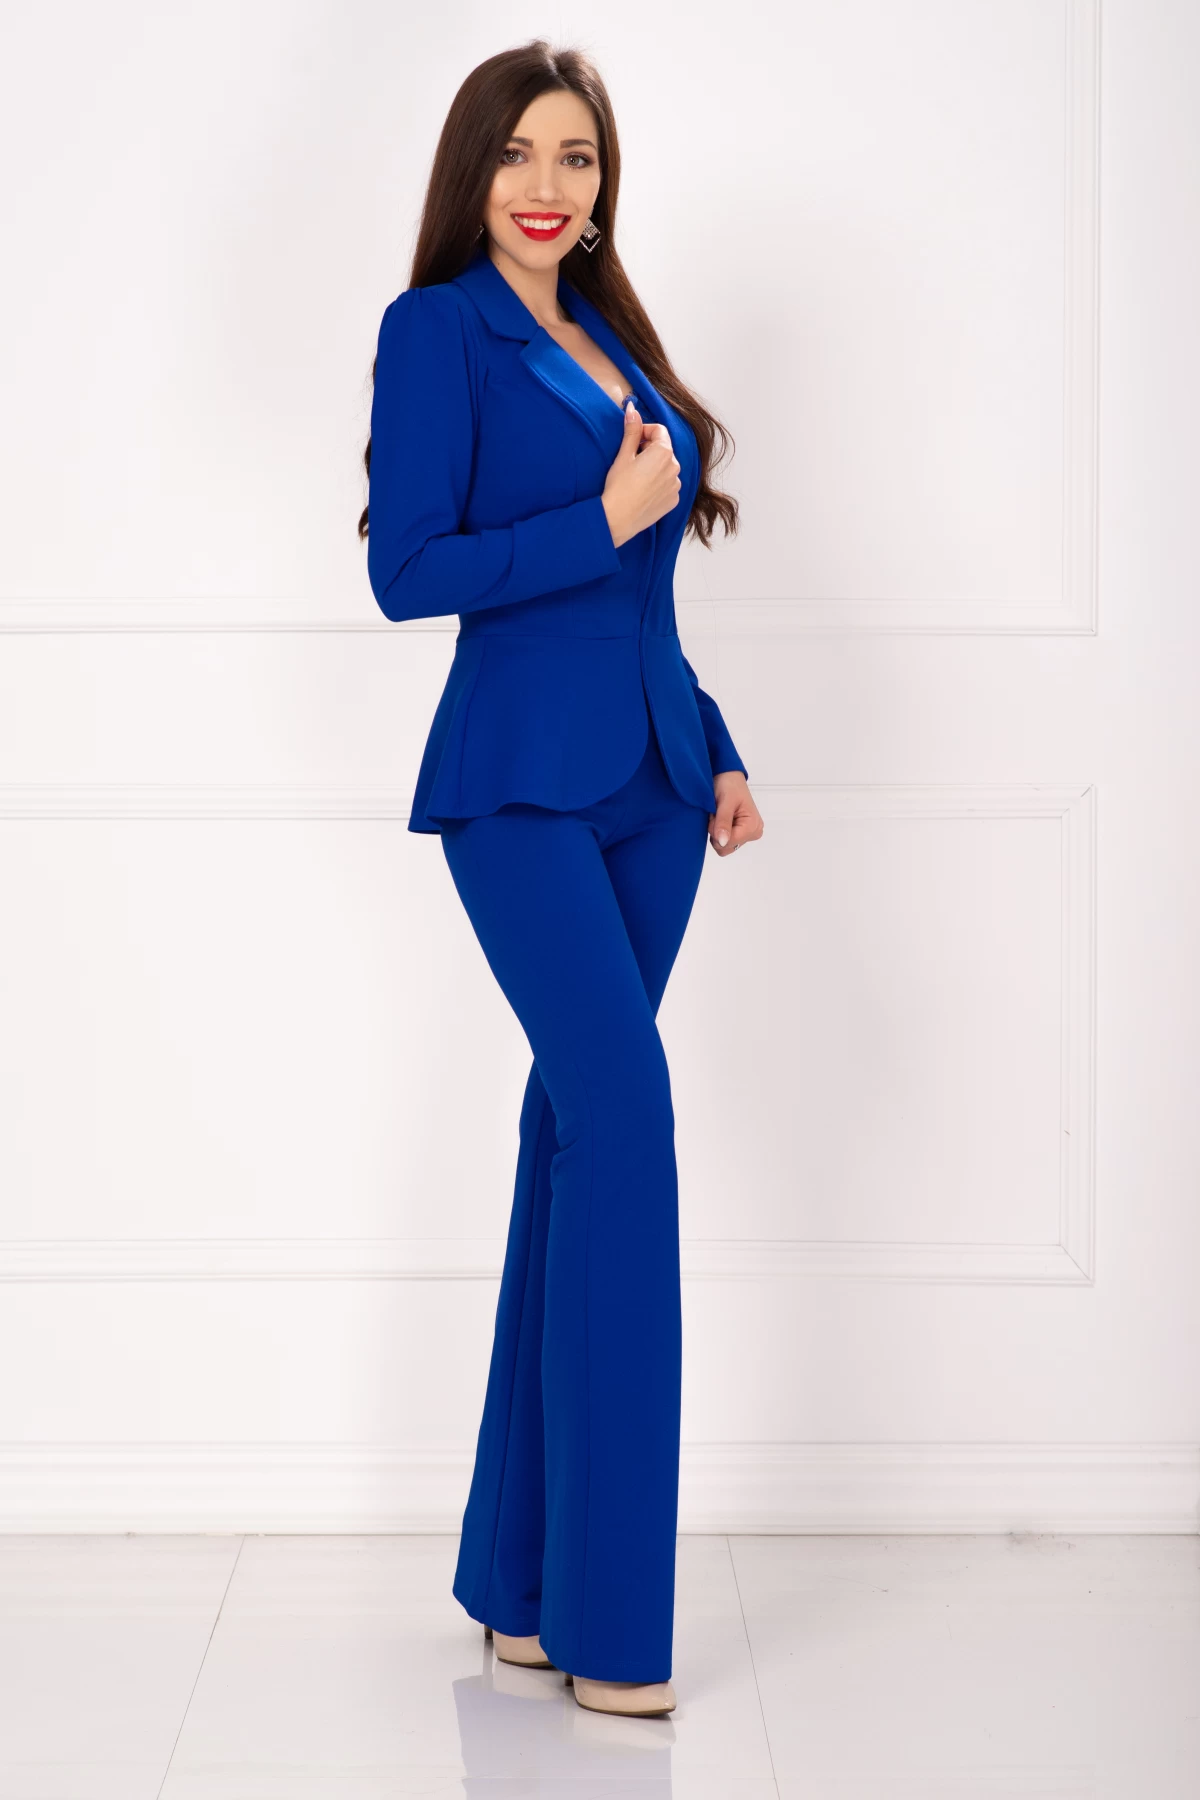 Compleu office elegant albastru royal cu pantaloni evazati